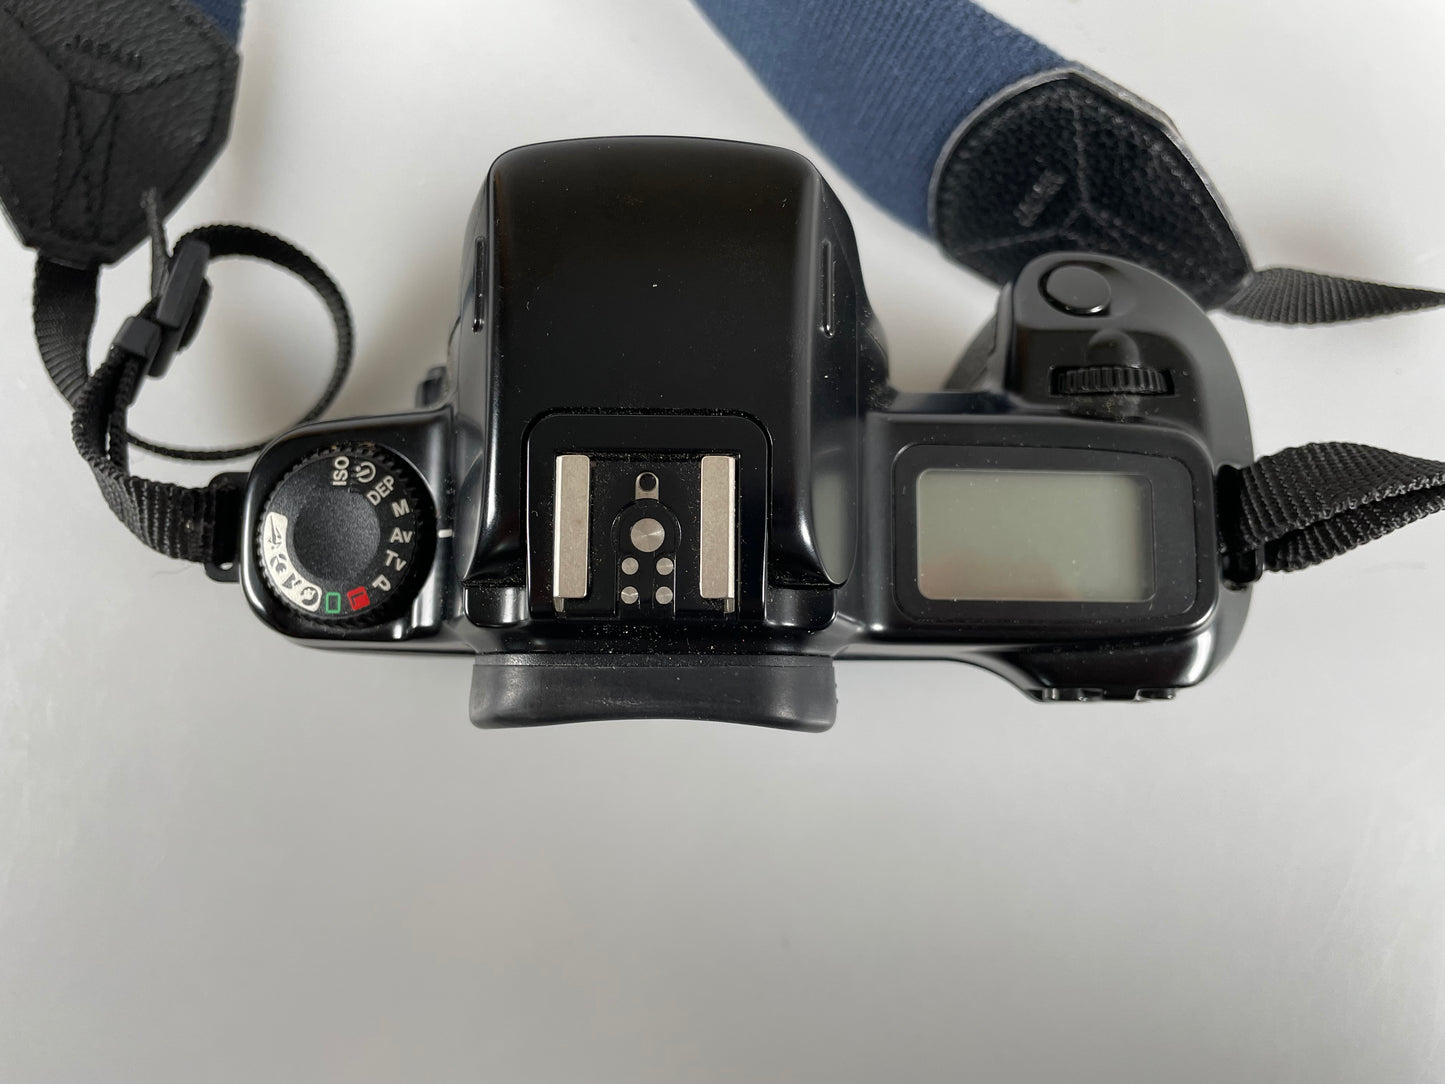 Canon EOS Rebel S 35mm SLR Film Camera Body